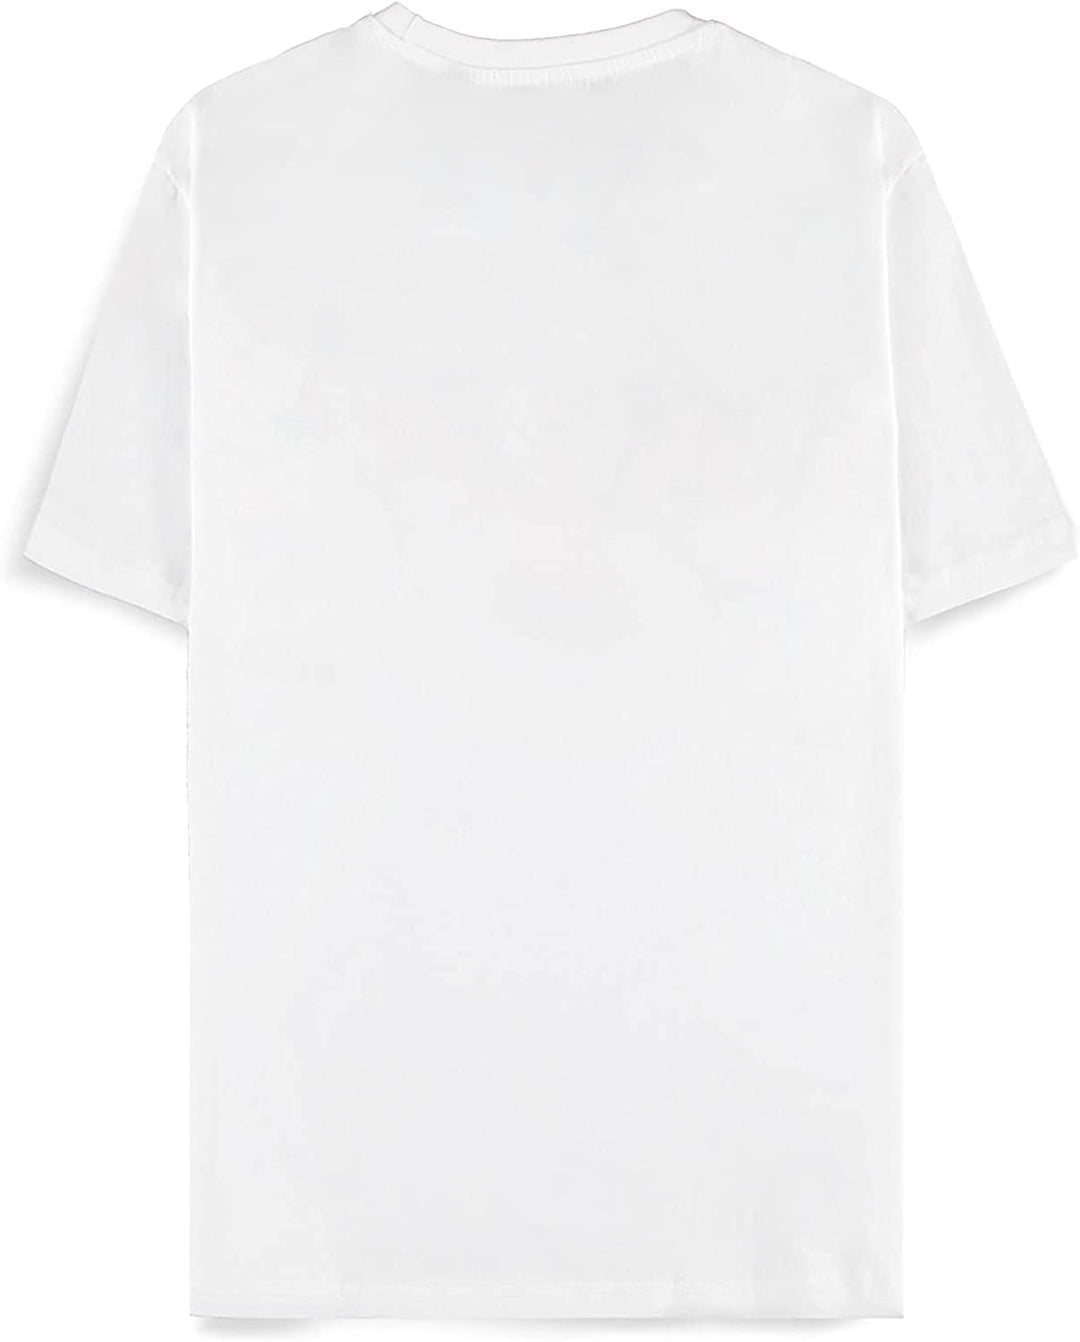 POKEMON - Dracaufeu #006 - T-Shirt Homme (M)